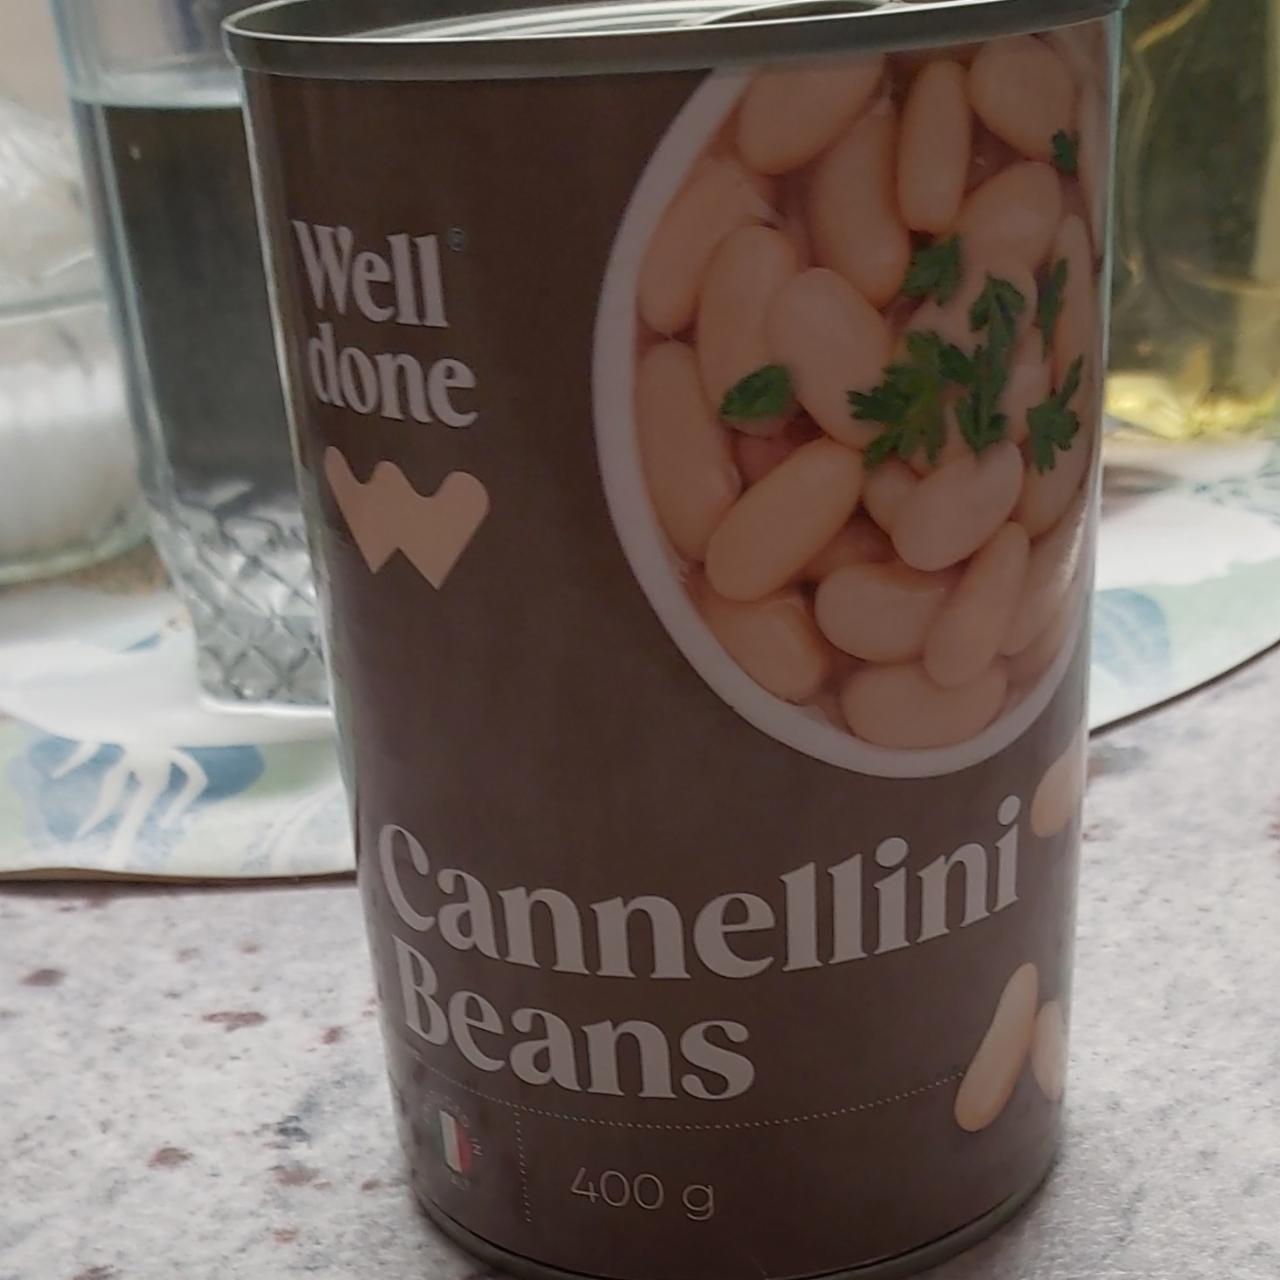 Фото - Фасоль консервированая cannellini beans Well done